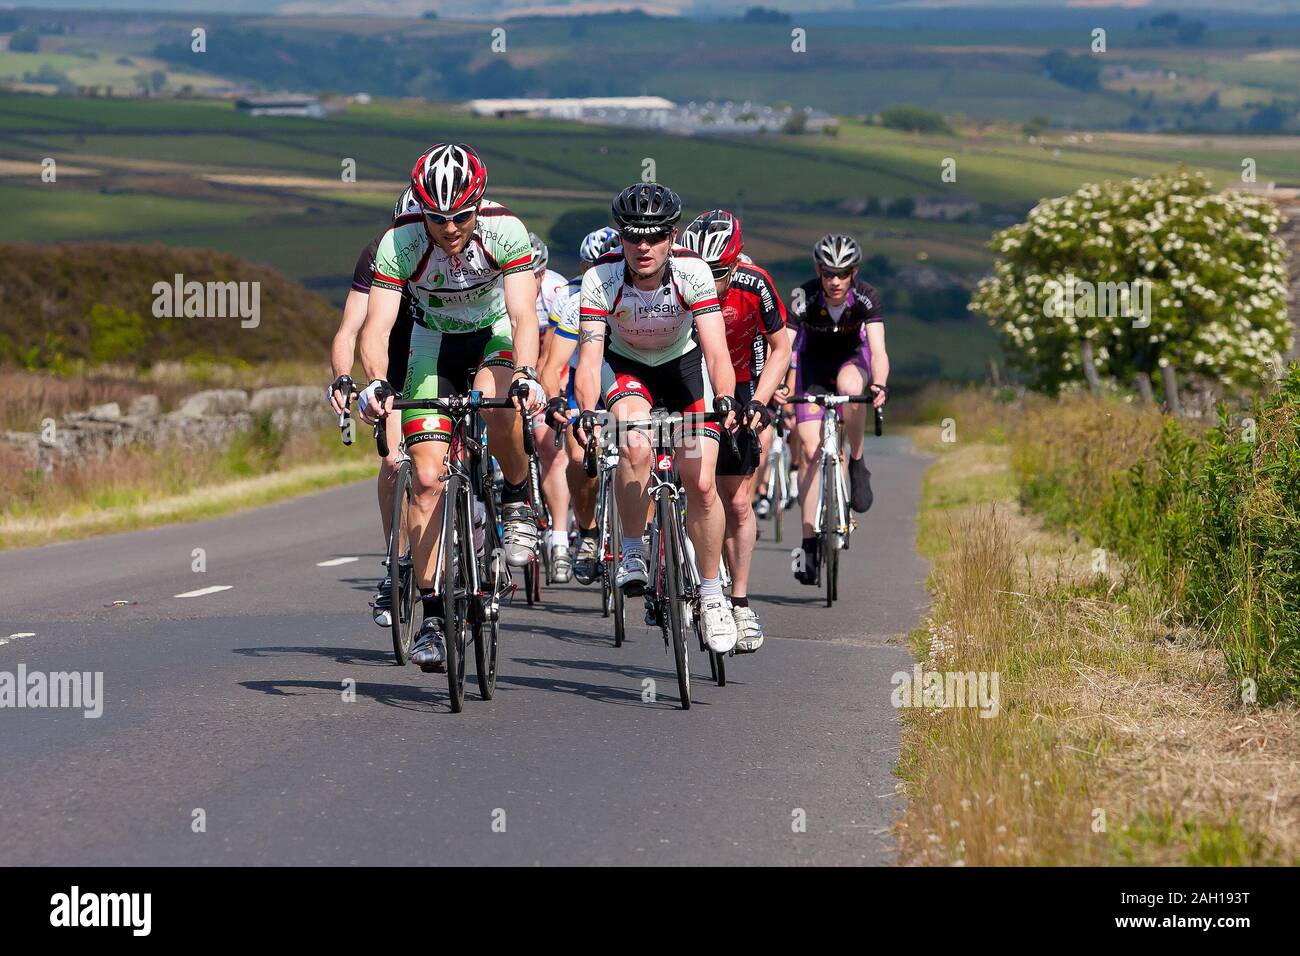 Cycling - Road Racing Stock Photo